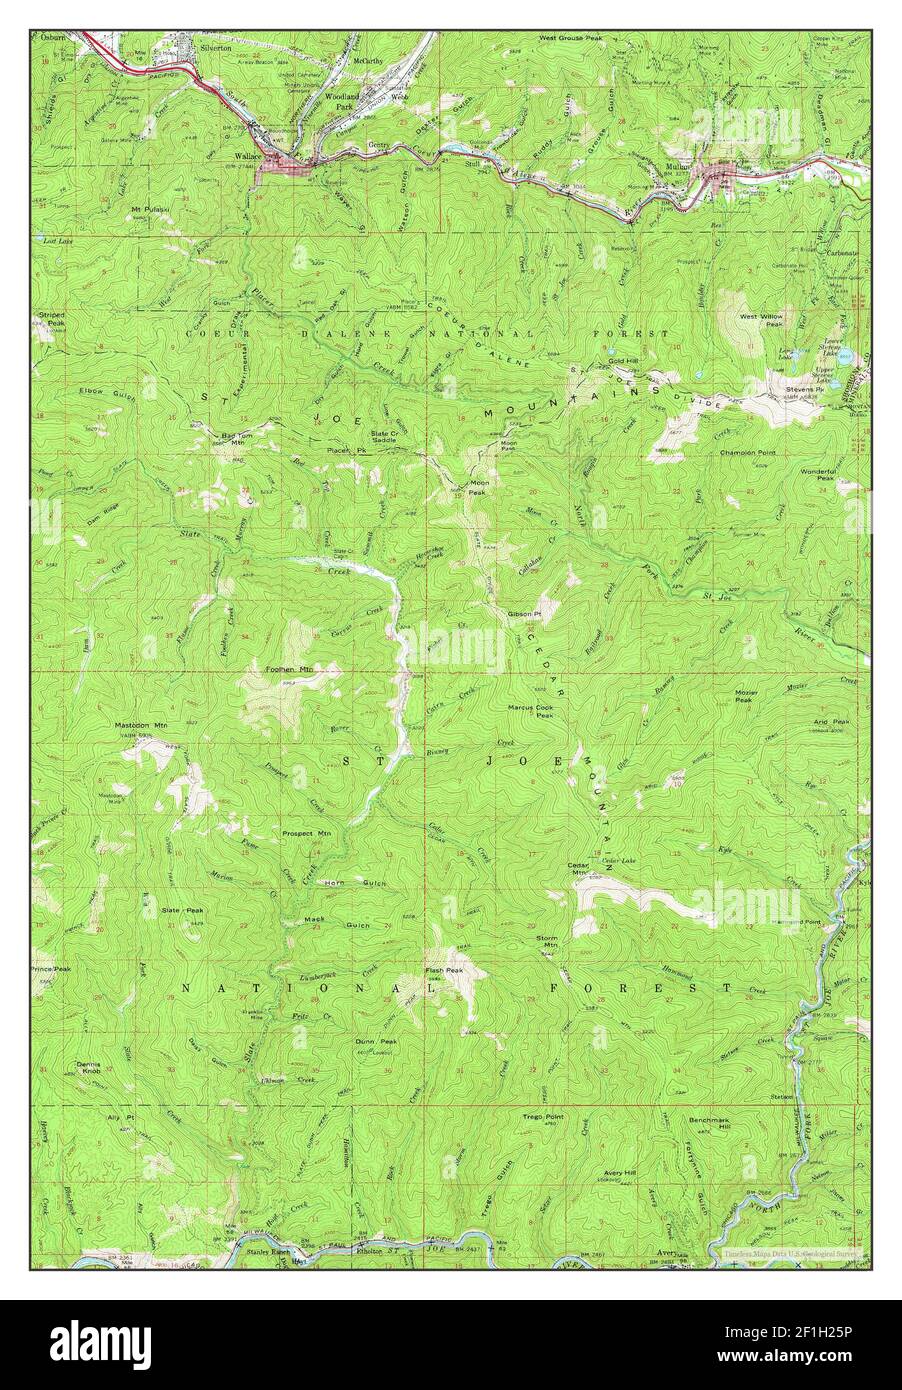 Wallace, Idaho, map 1957, 1:62500, United States of America by Timeless Maps, data U.S. Geological Survey Stock Photo